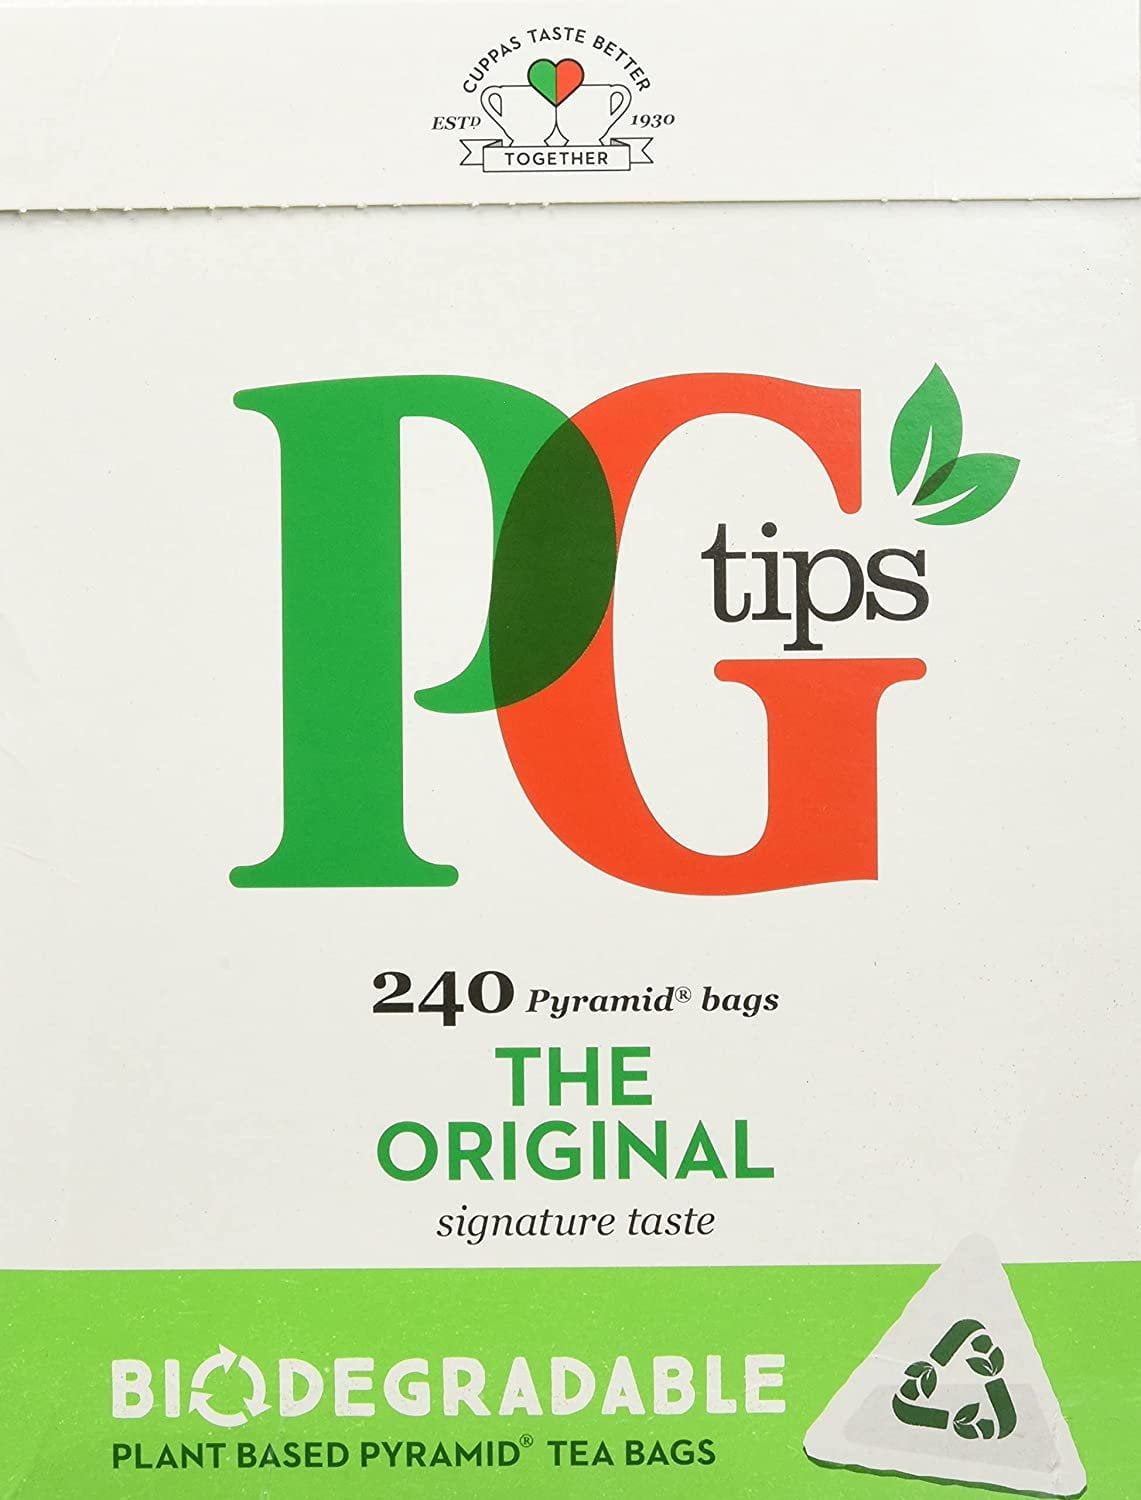 PG Tips Tea 300TB